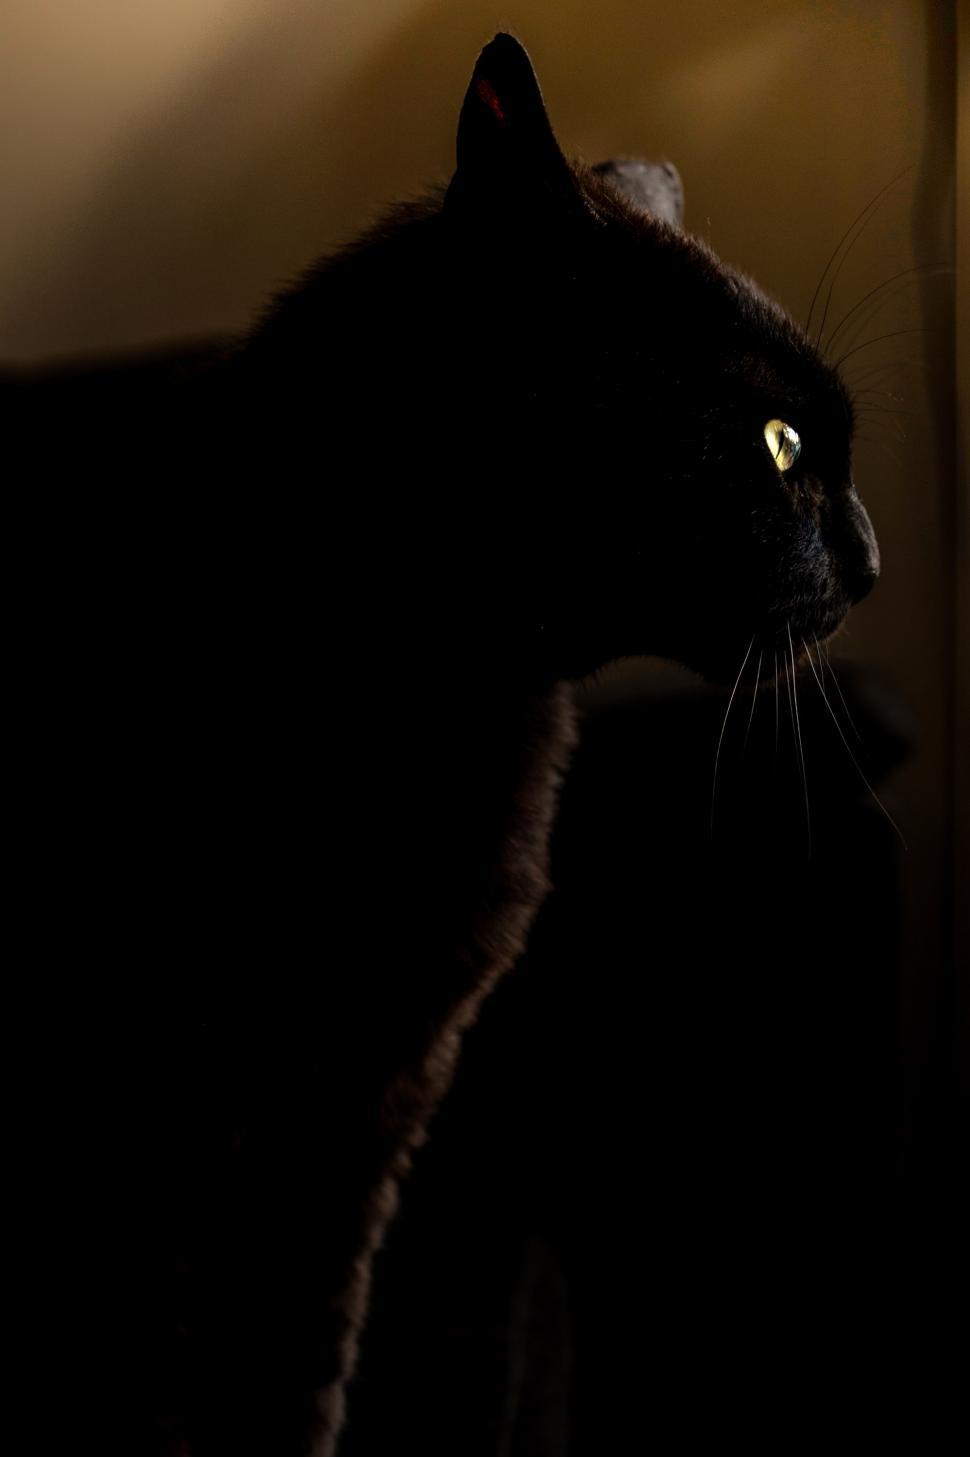 Free Image of Black Cat Sitting in Dark Room 